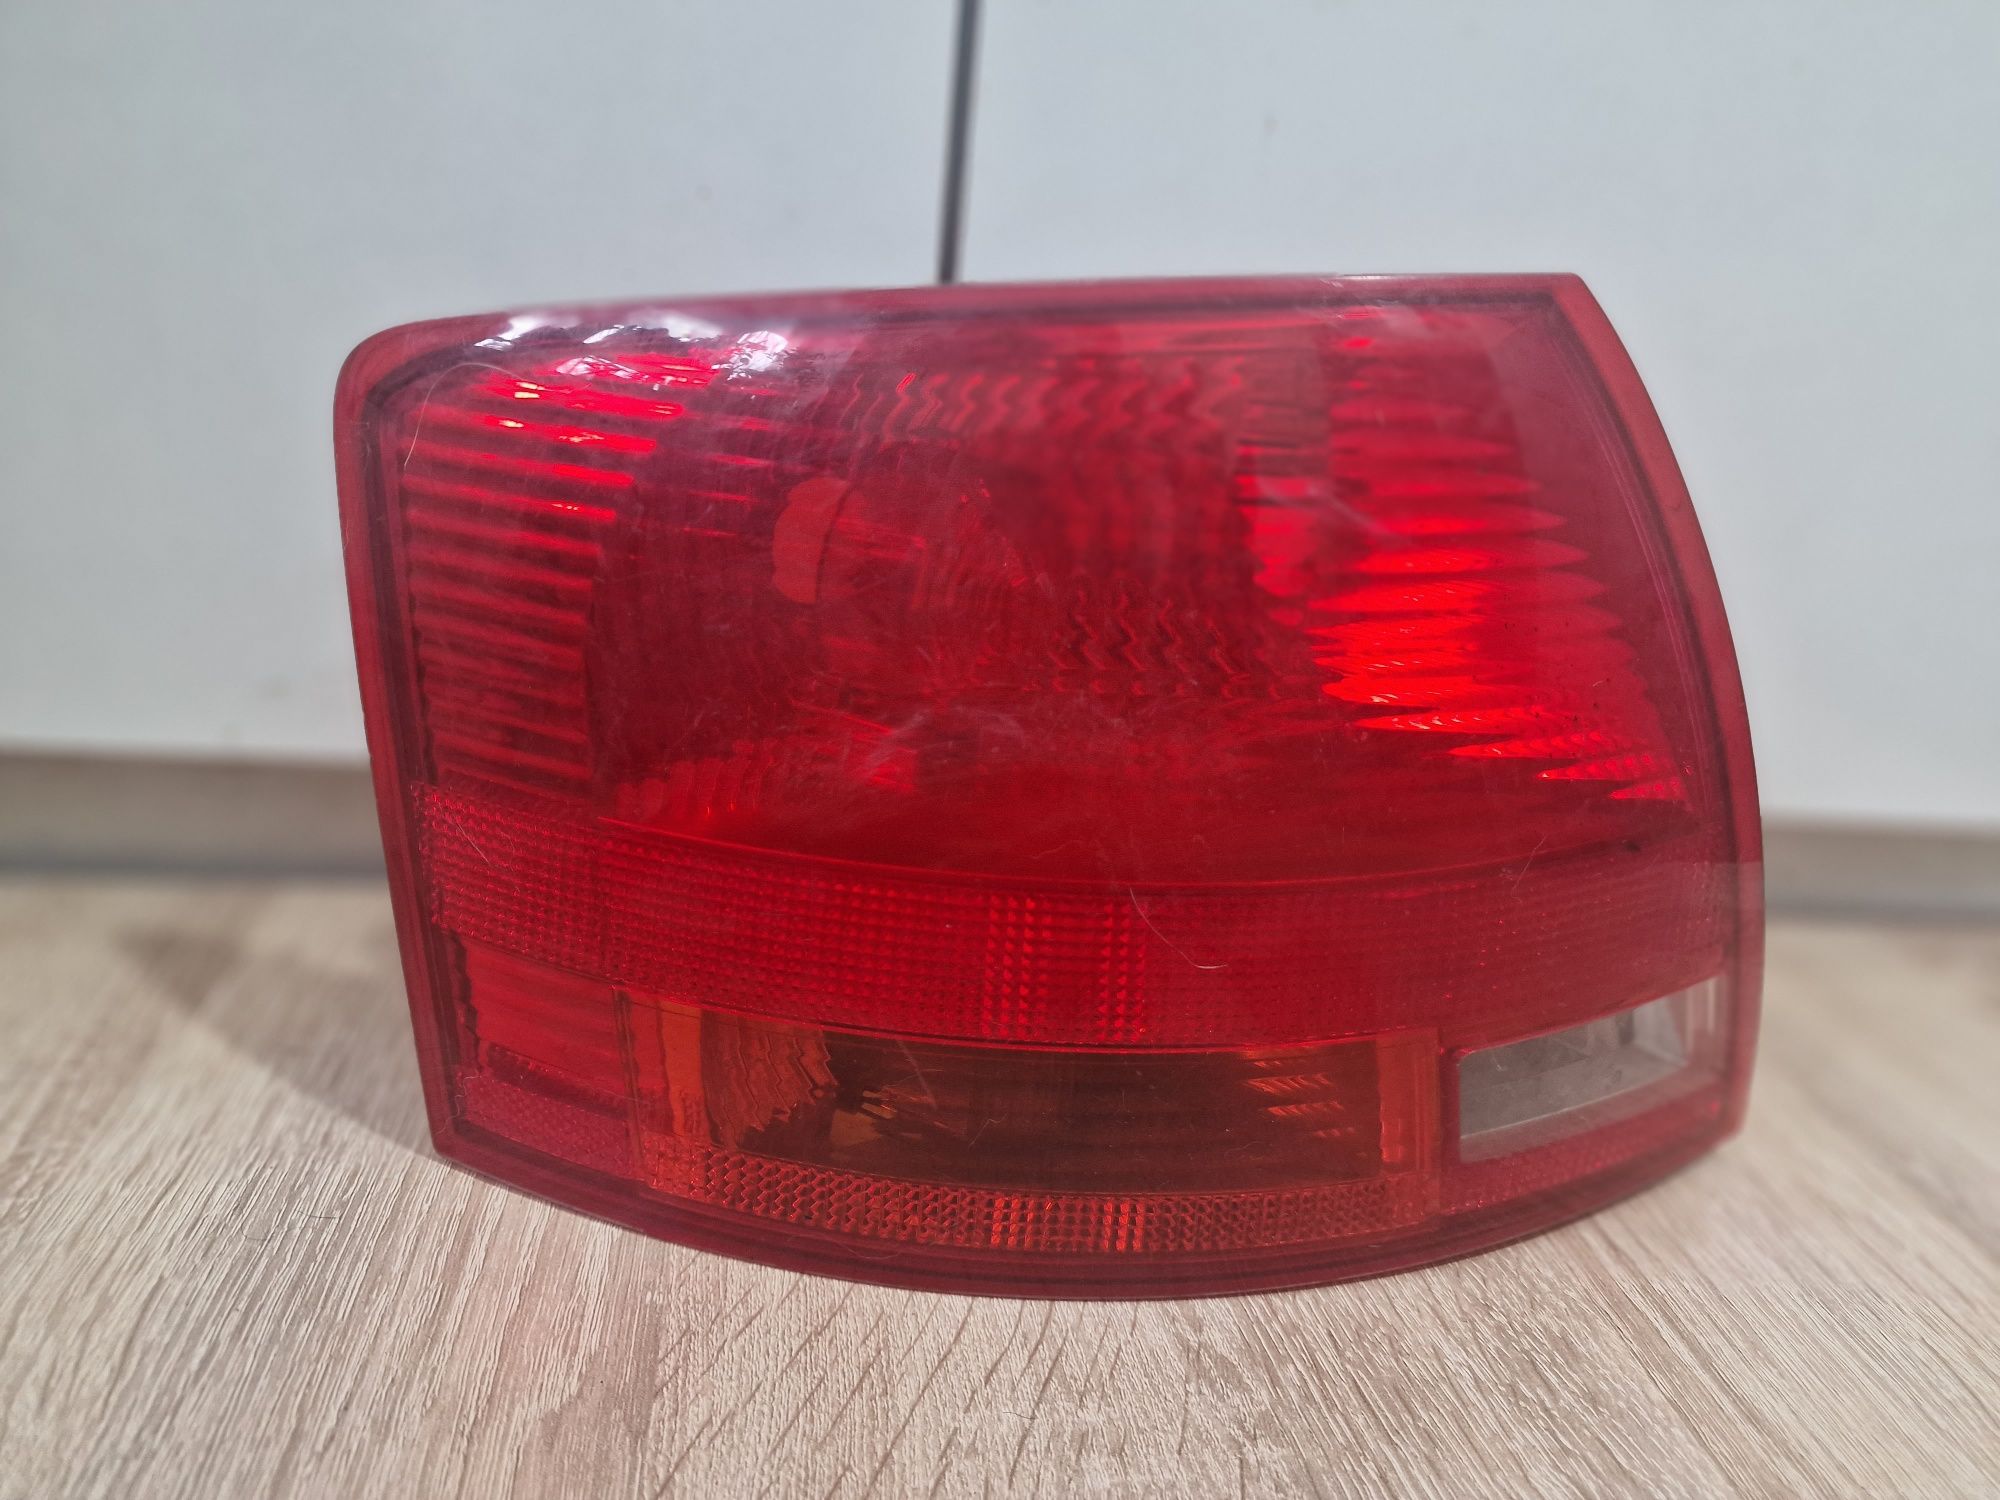 Задний фонарь Audi A4 b7 Левый